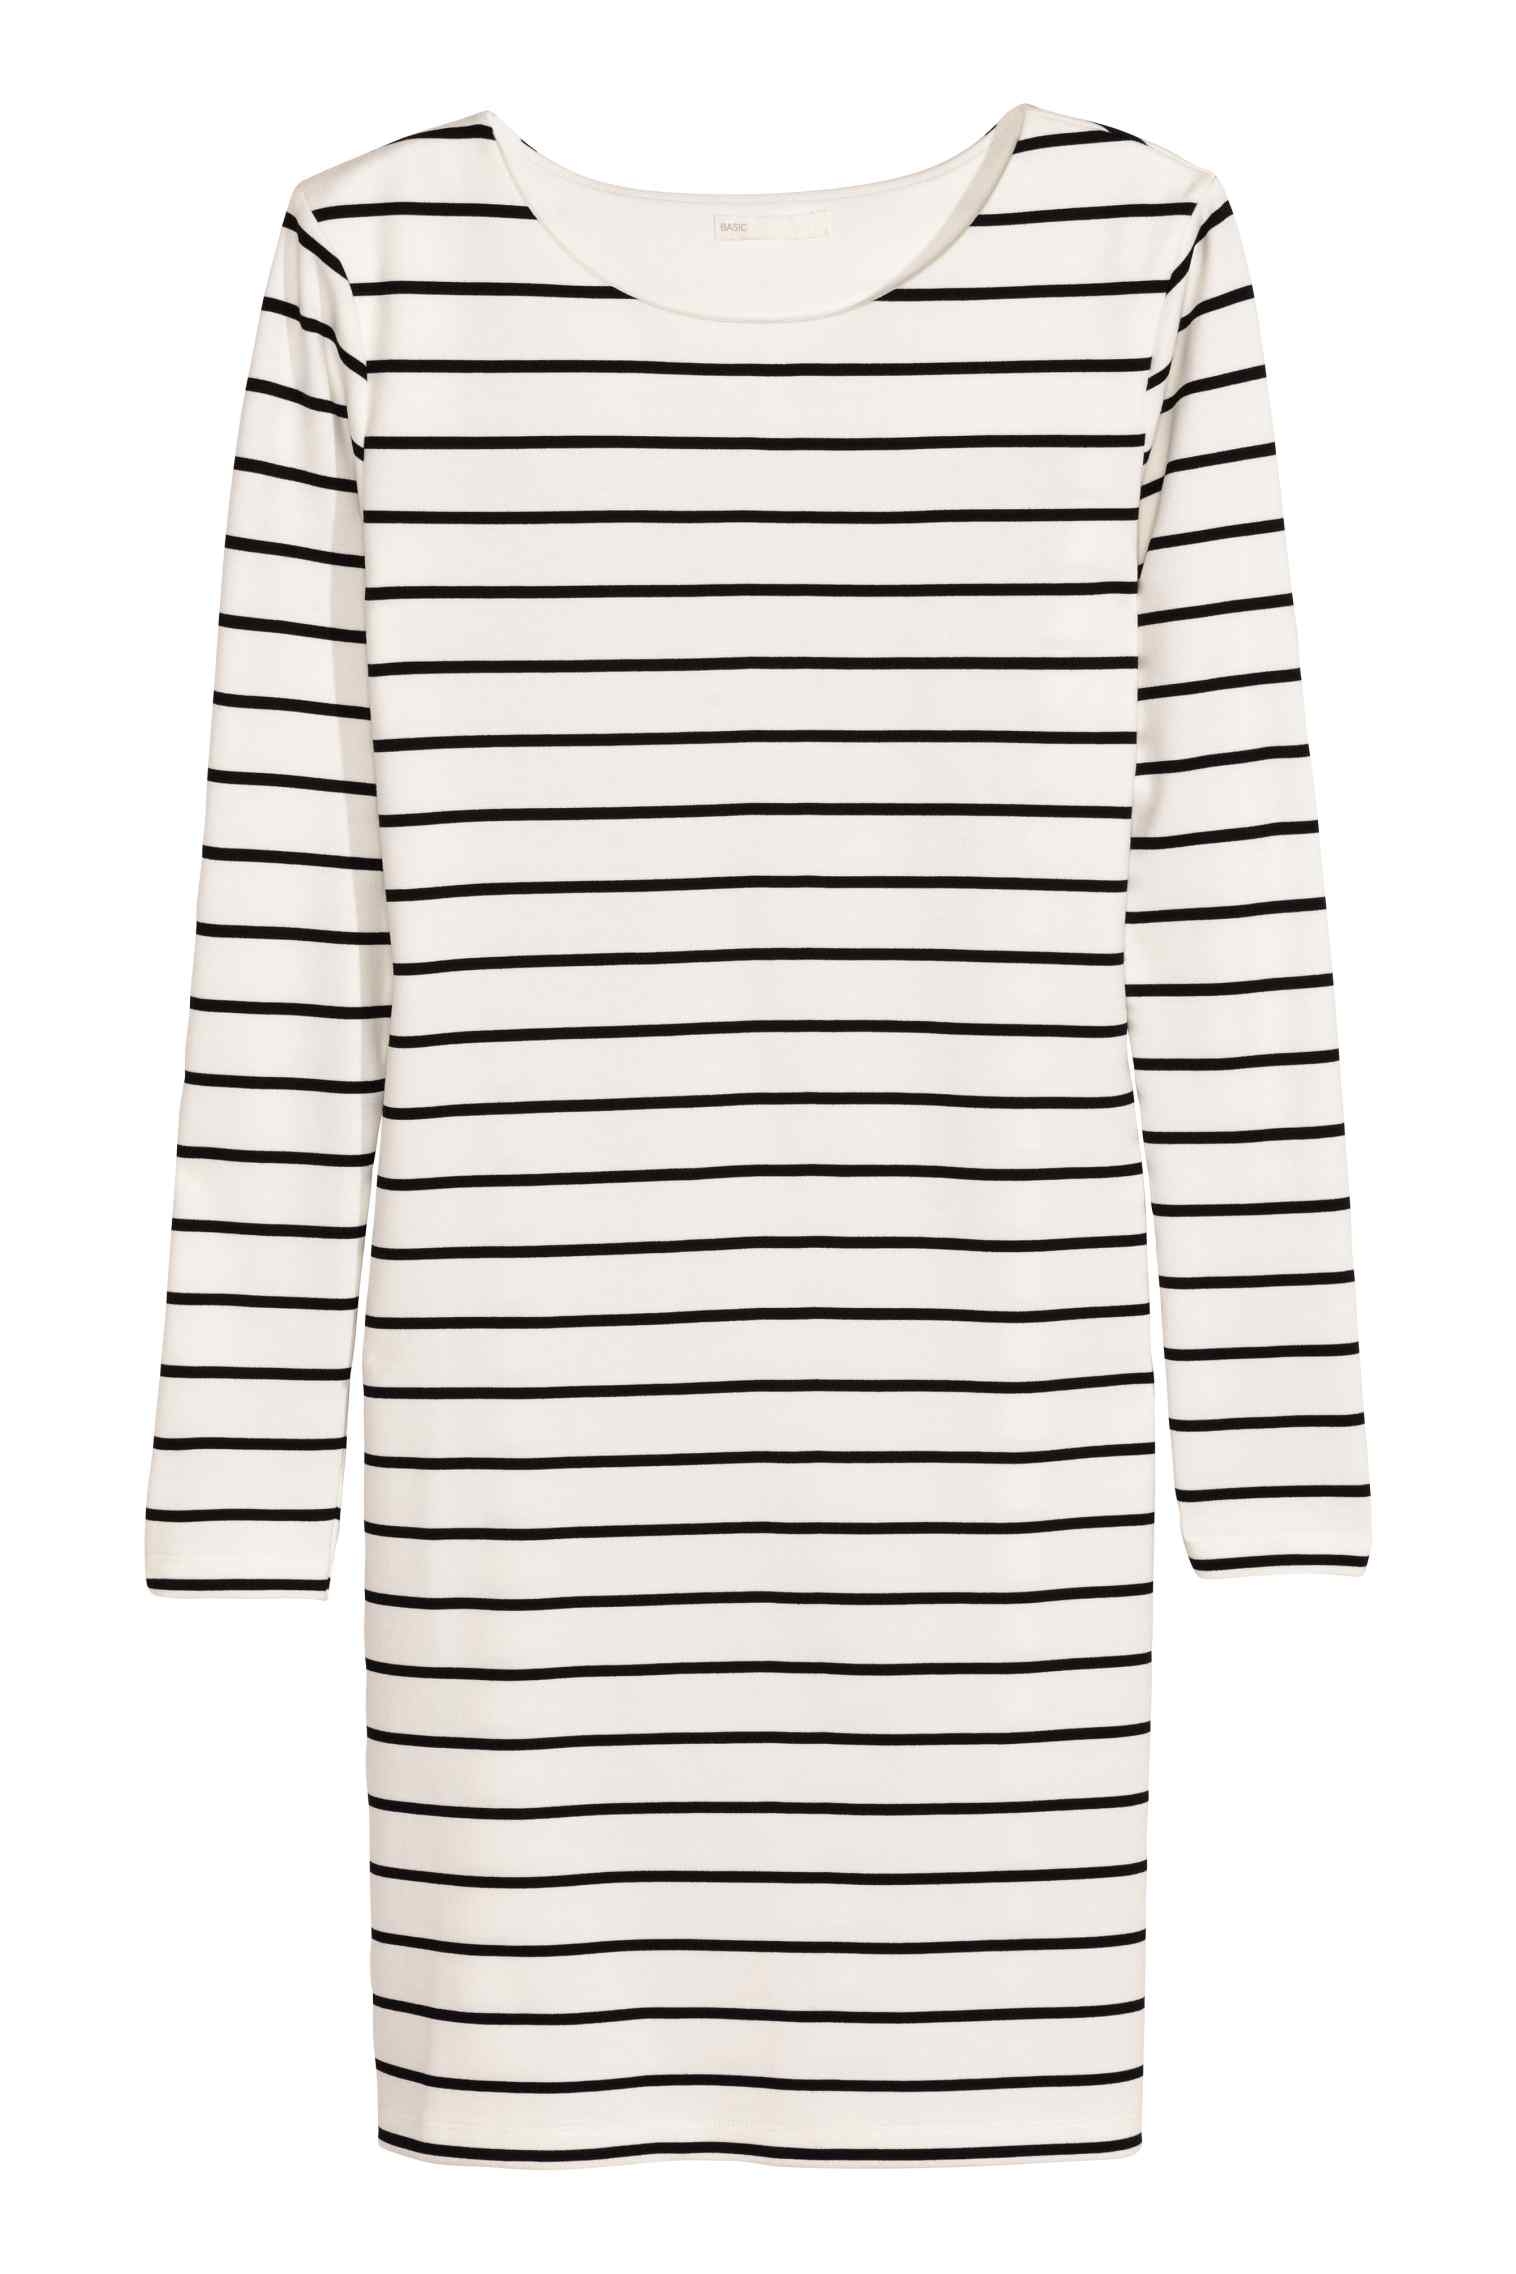 H&M striped Jersey dress